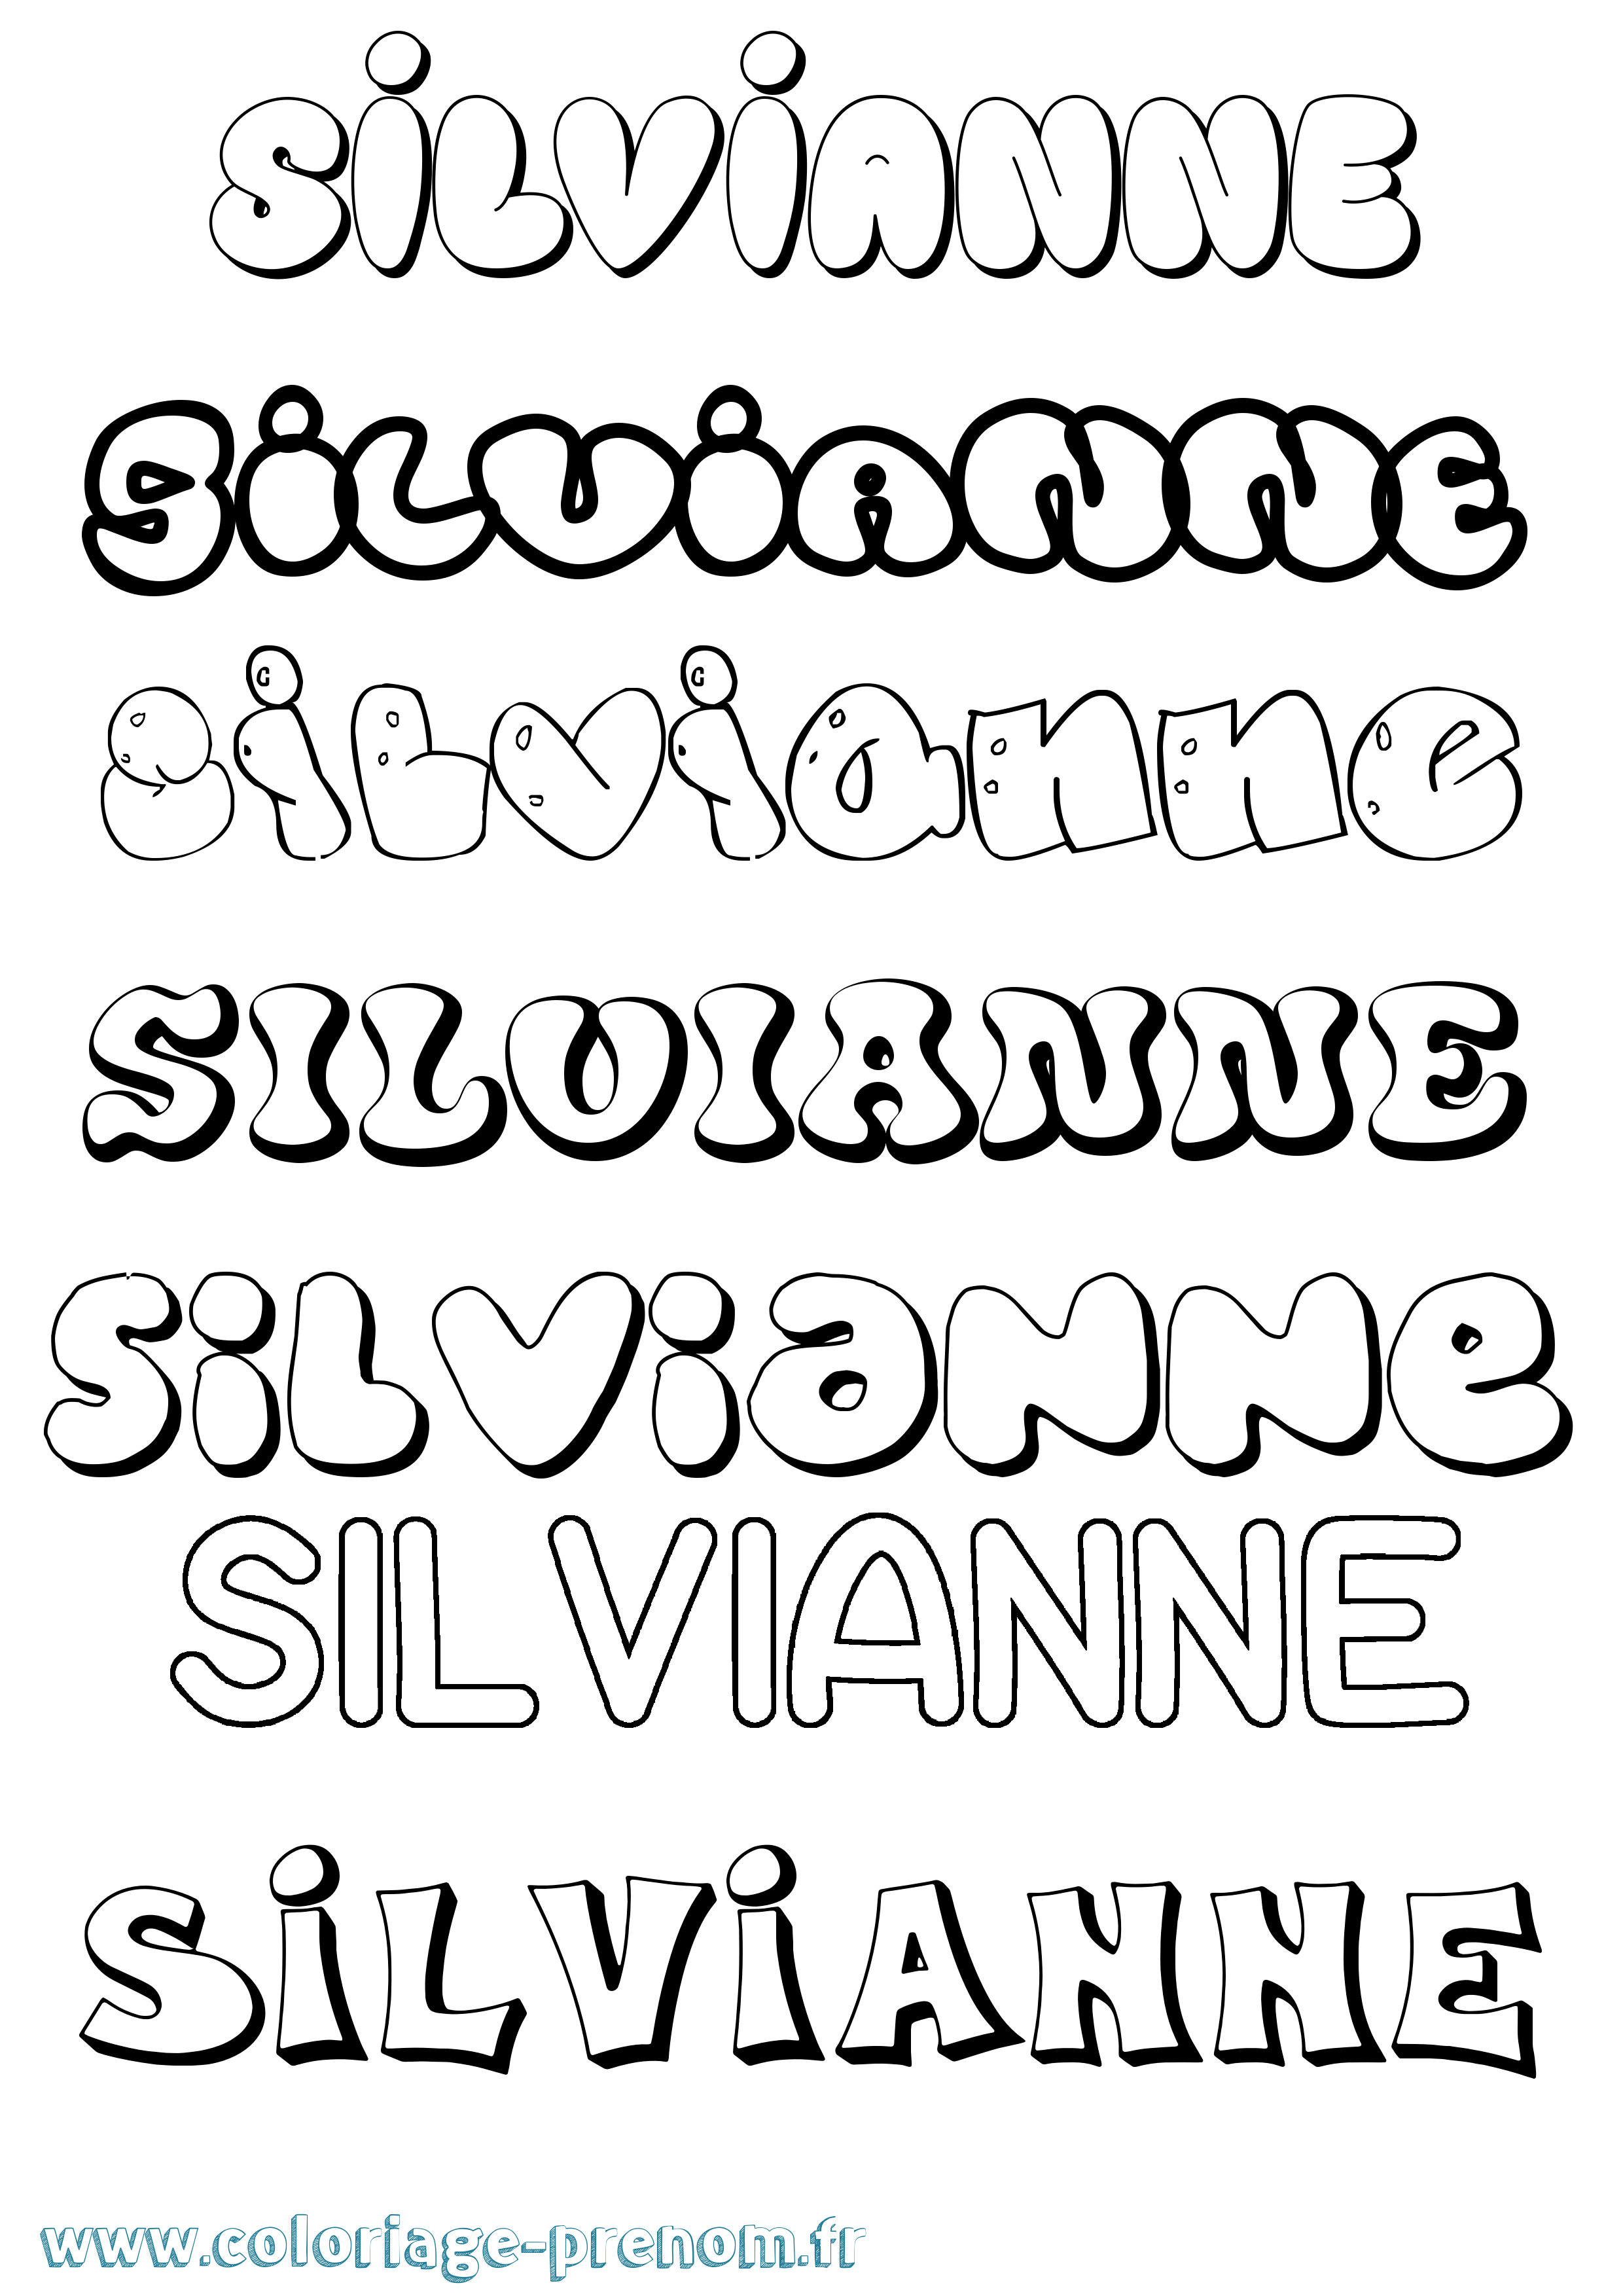 Coloriage prénom Silvianne Bubble